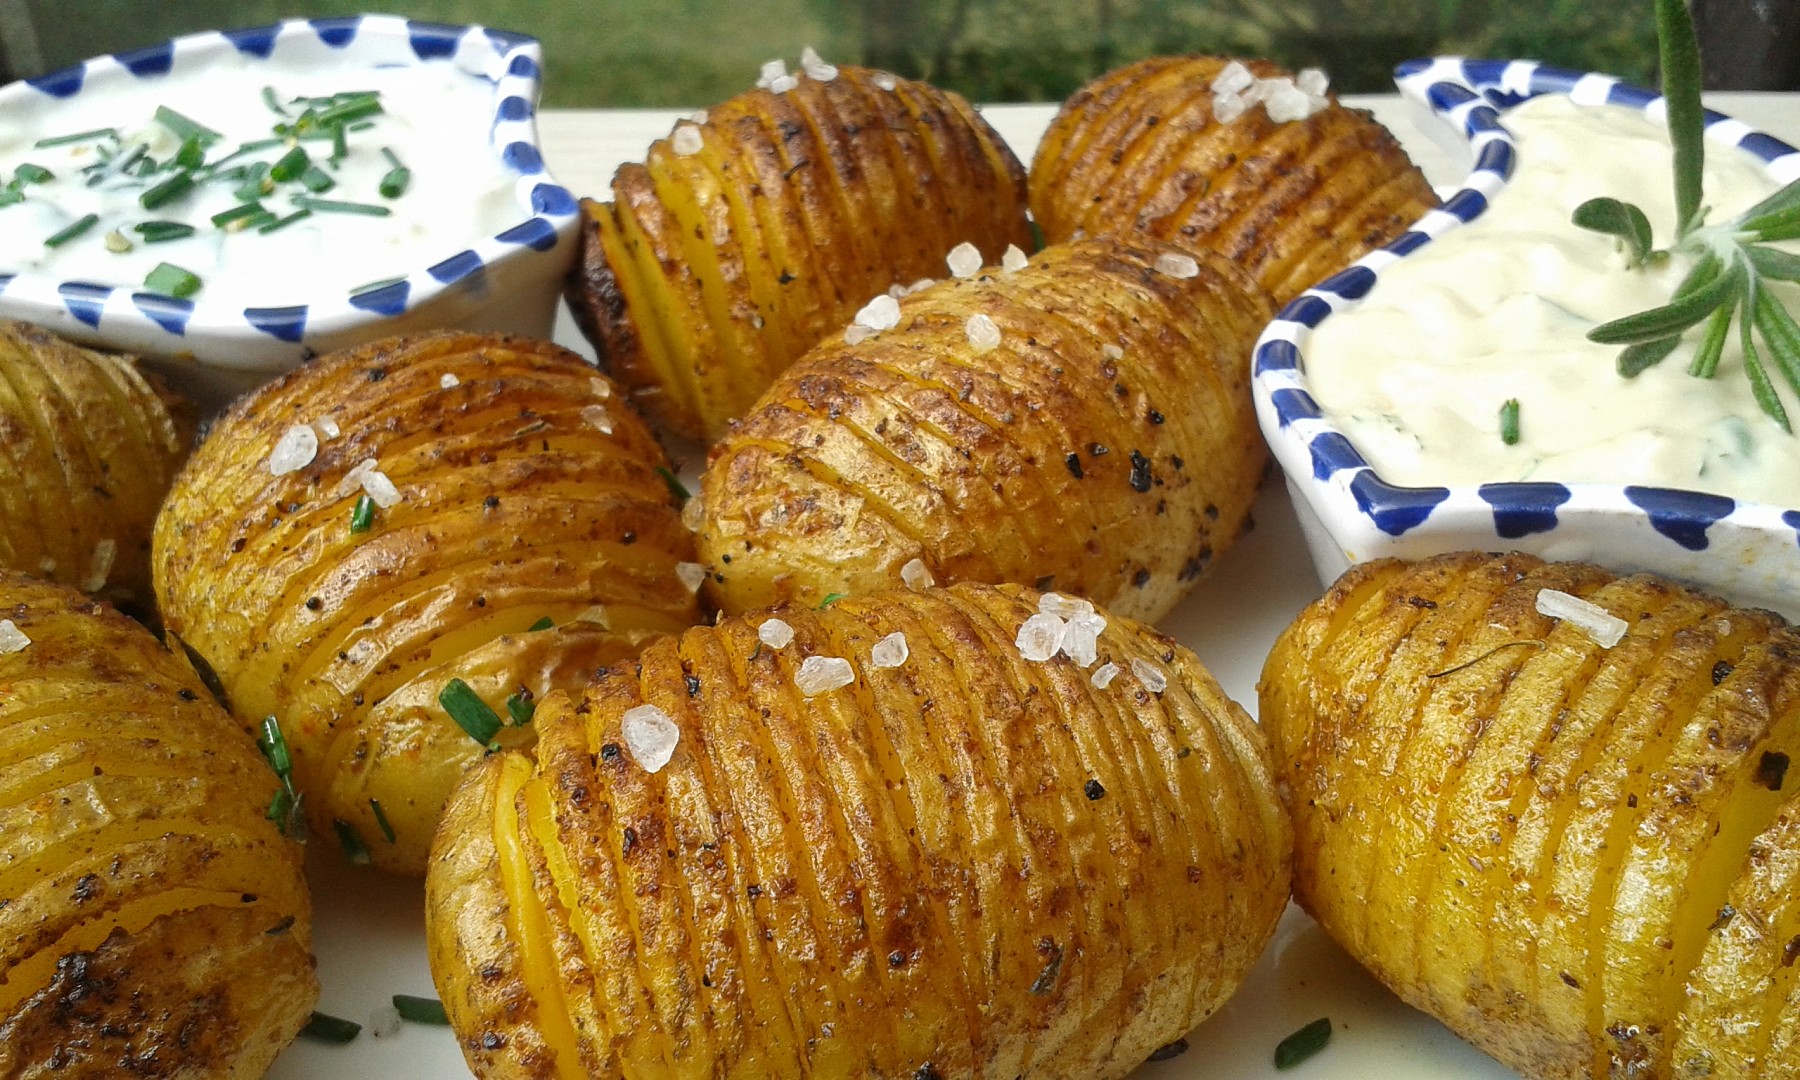 Pečené brambory se dvěma dipy